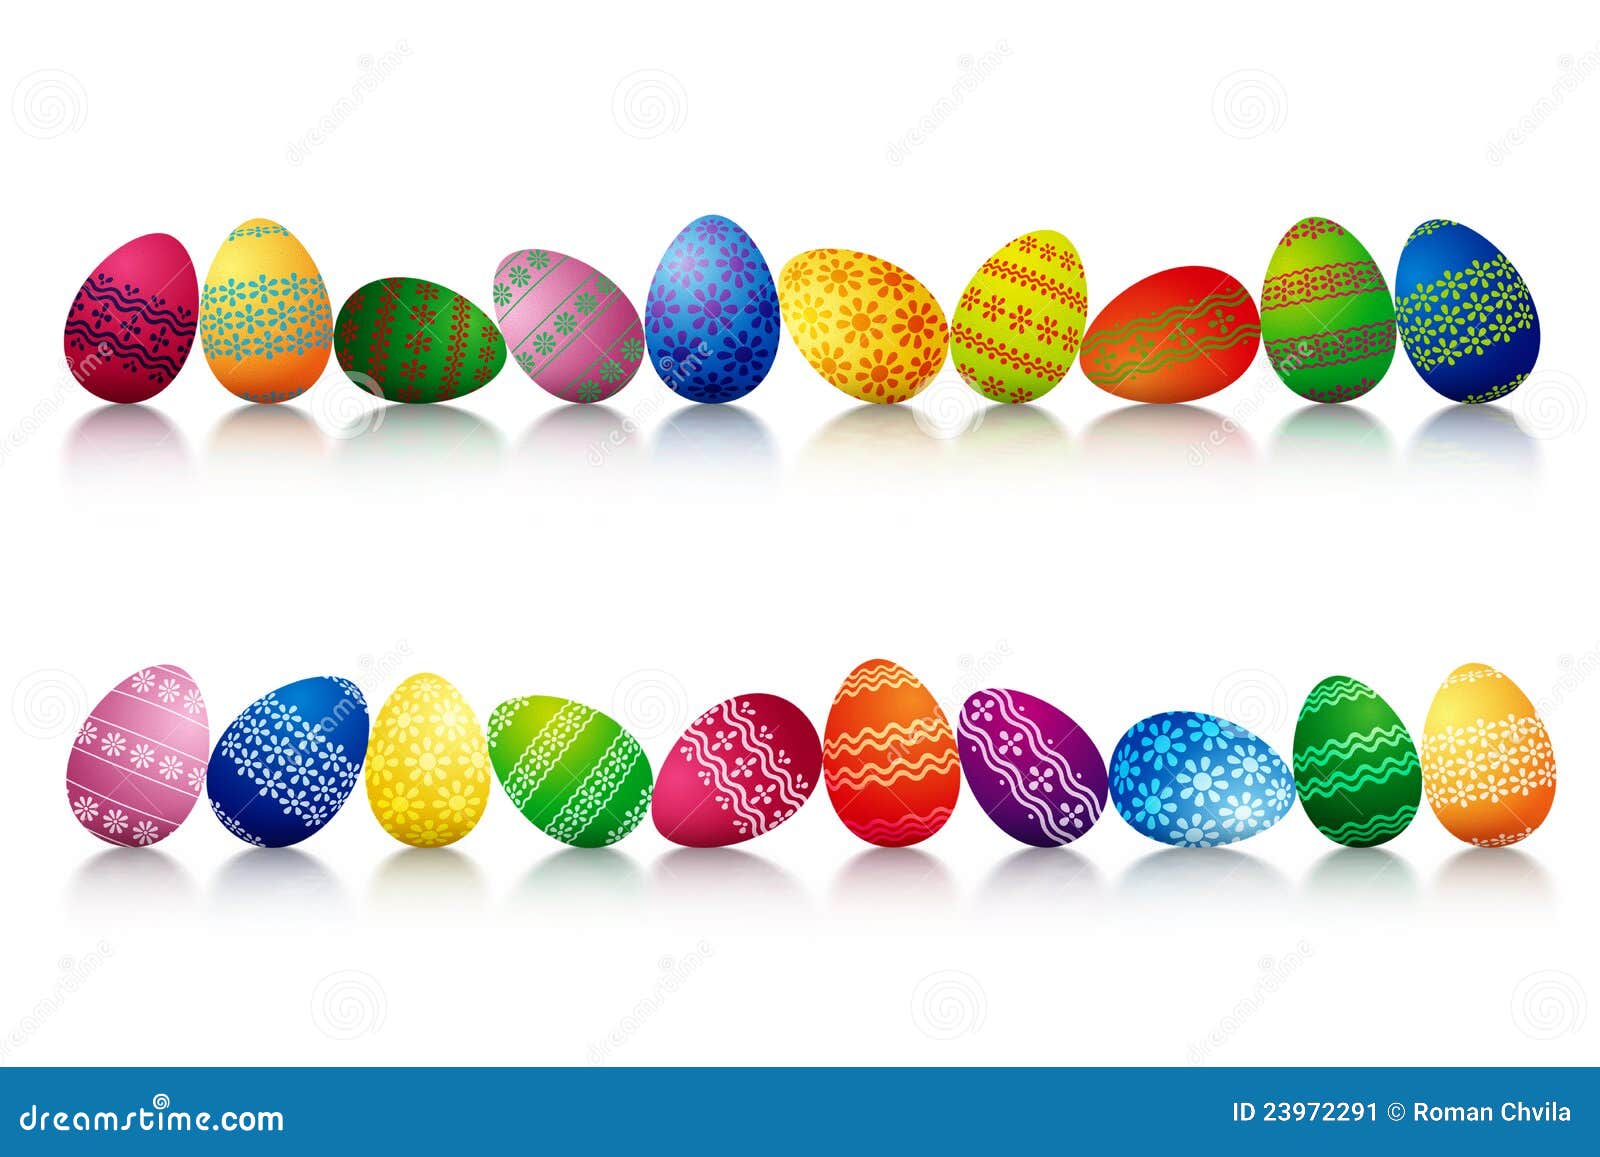 Easter Eggs In A Row stock illustration. Illustration of festive - 23972291